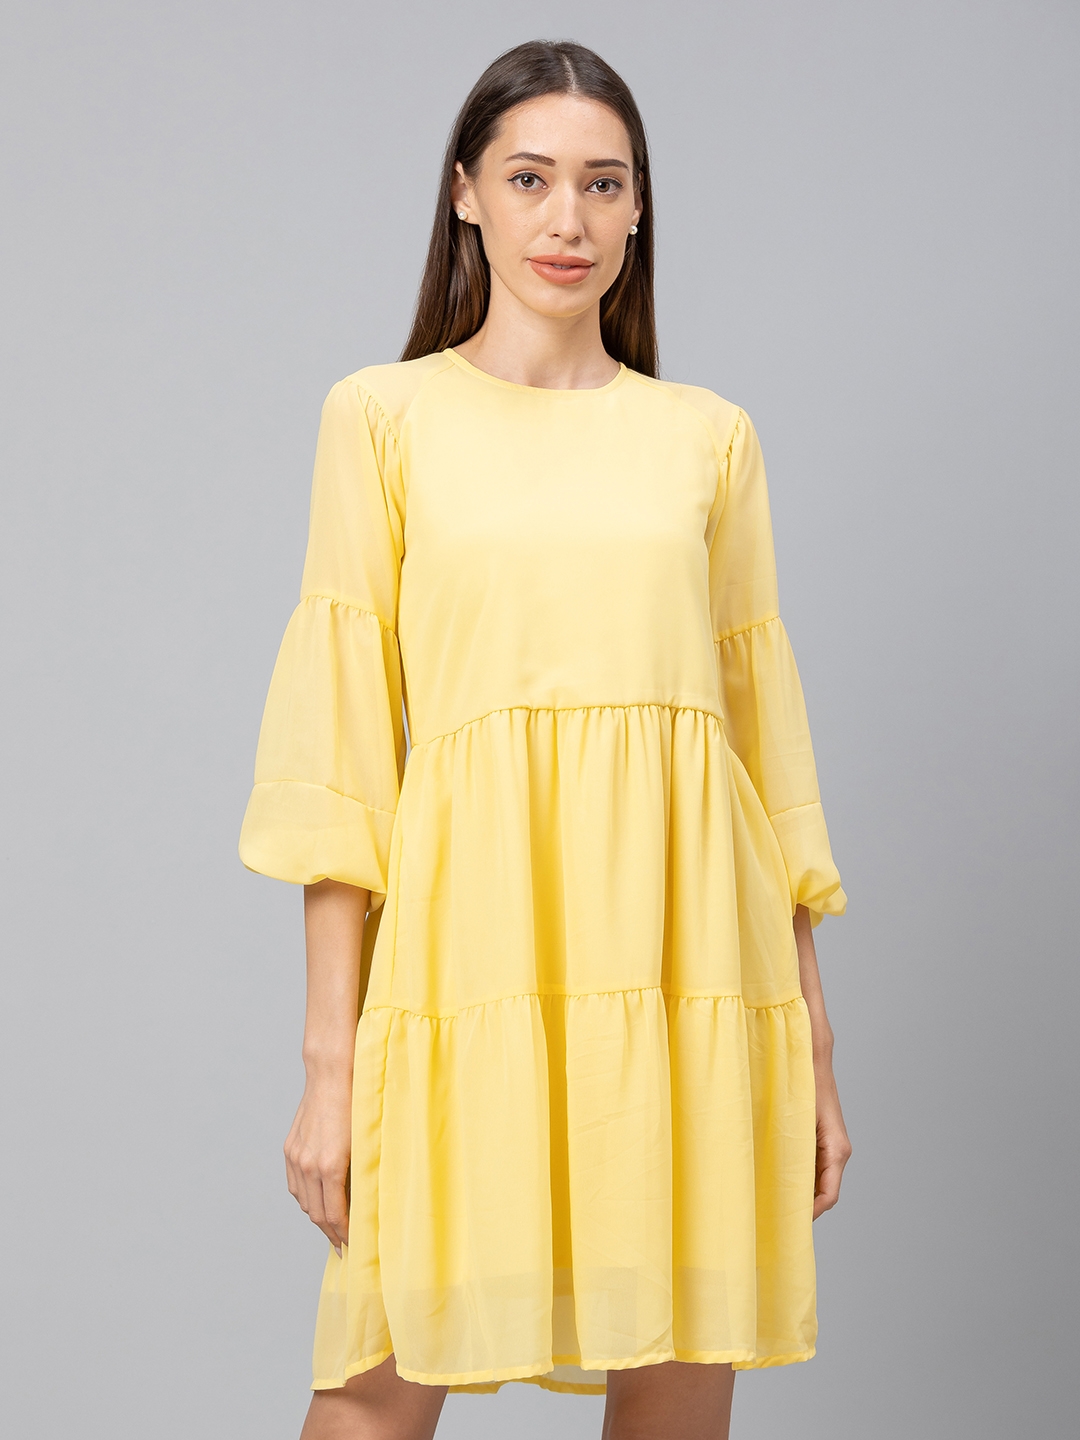 Globus Yellow Solid Dress